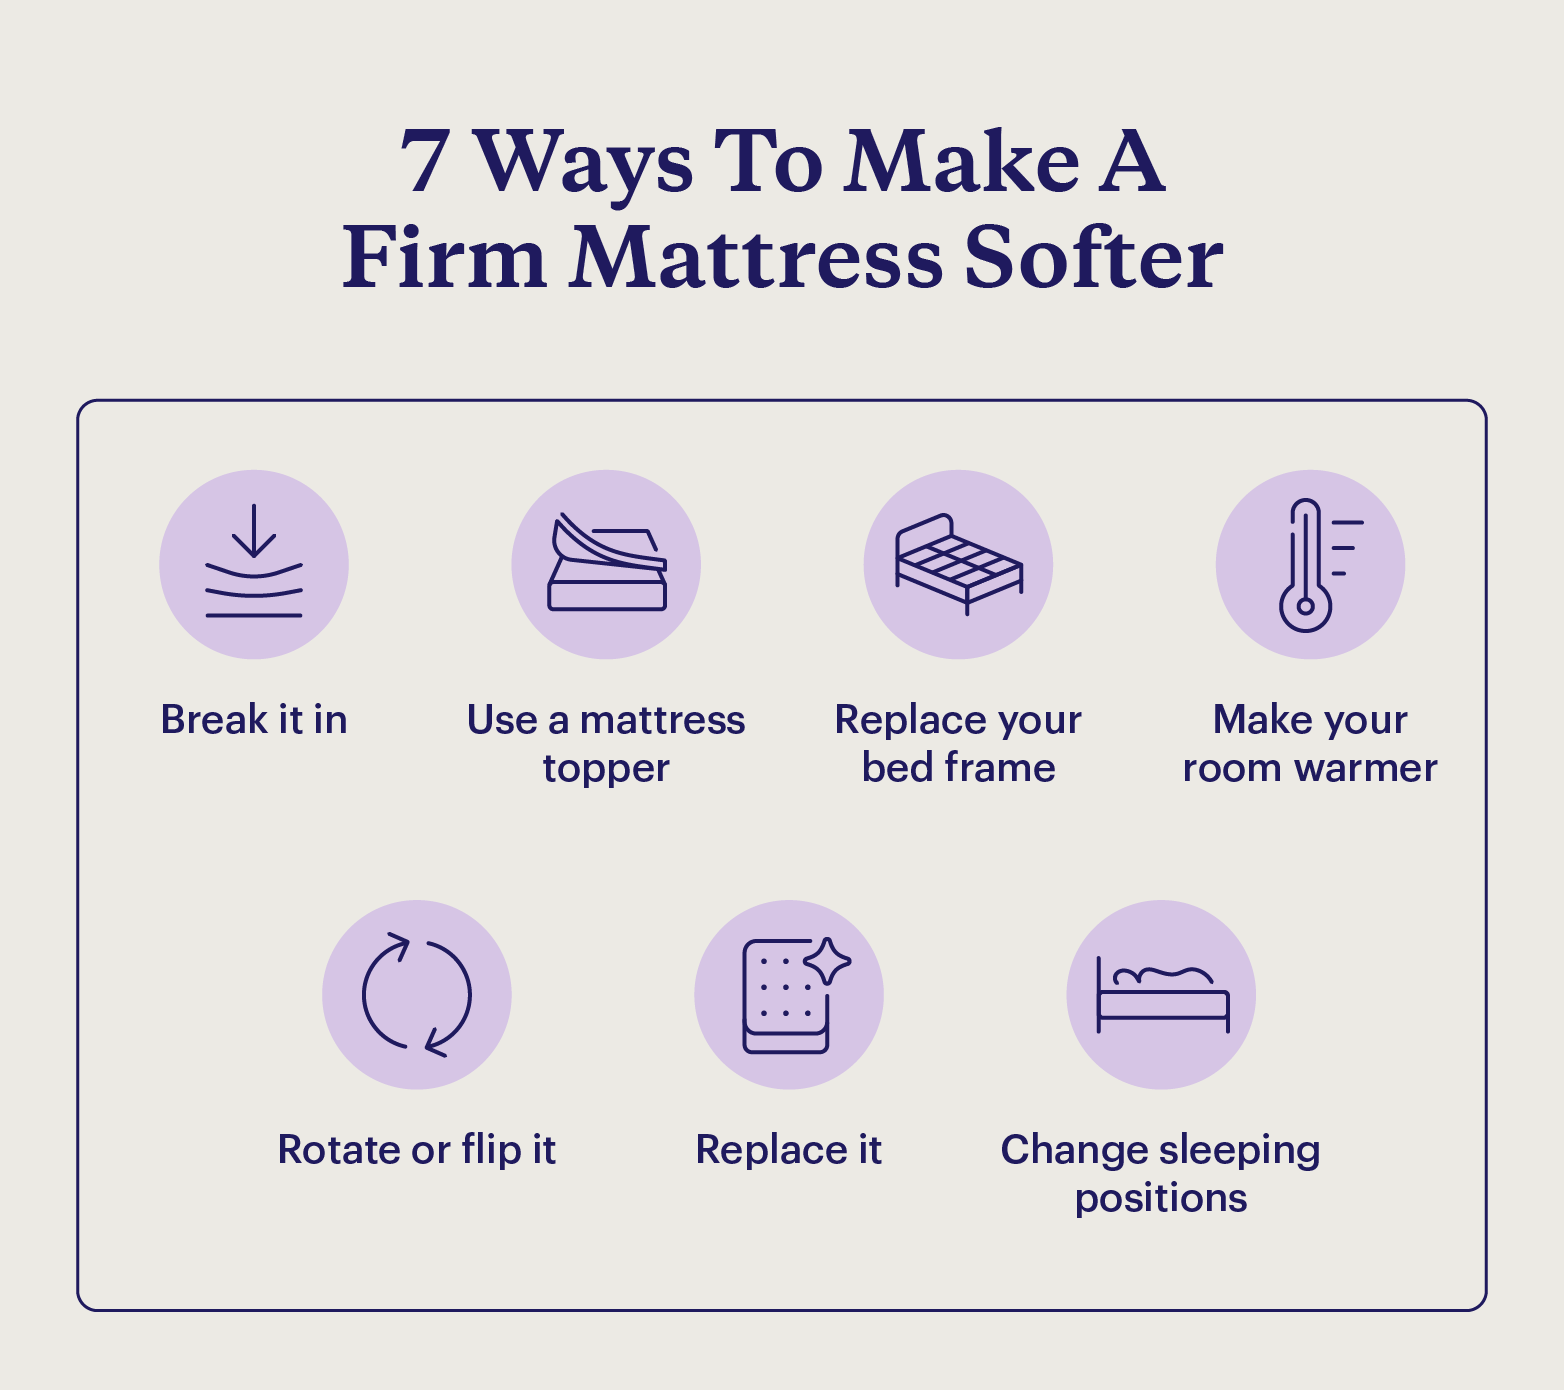 A graphic shows 7 Ways to Make a Firm Mattress Softer